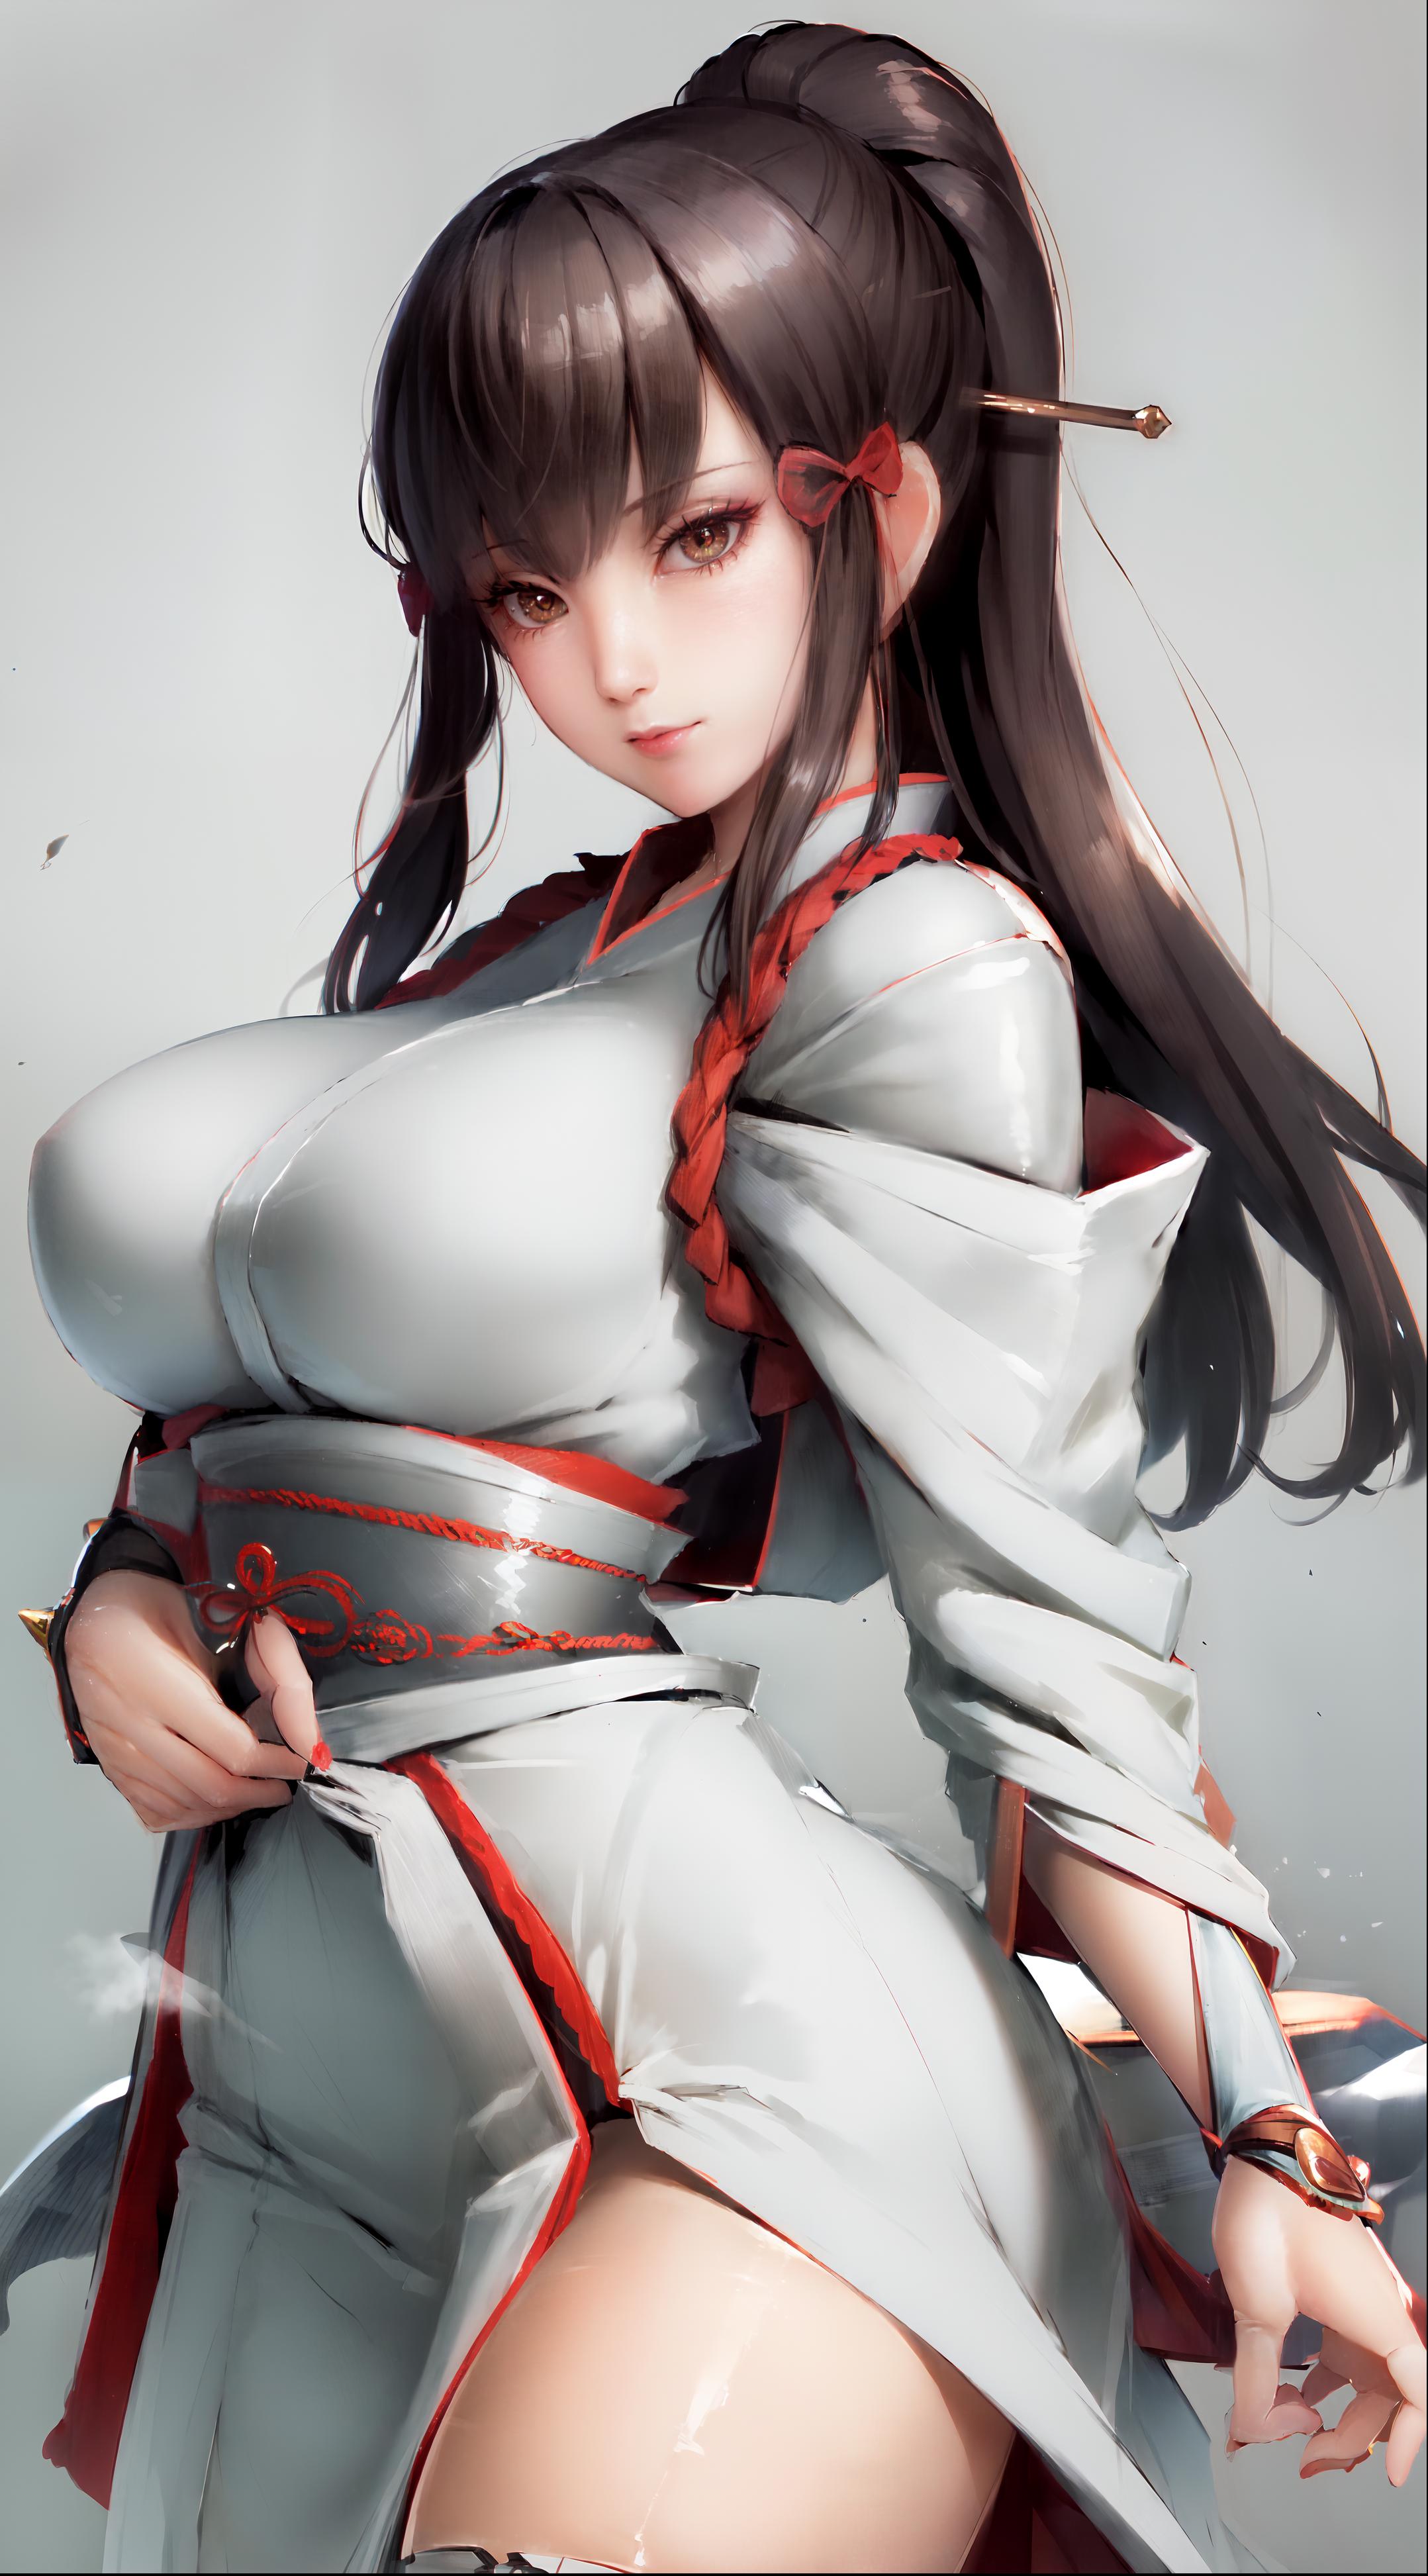 Kazumi Mishima From Tekken image by mrlee